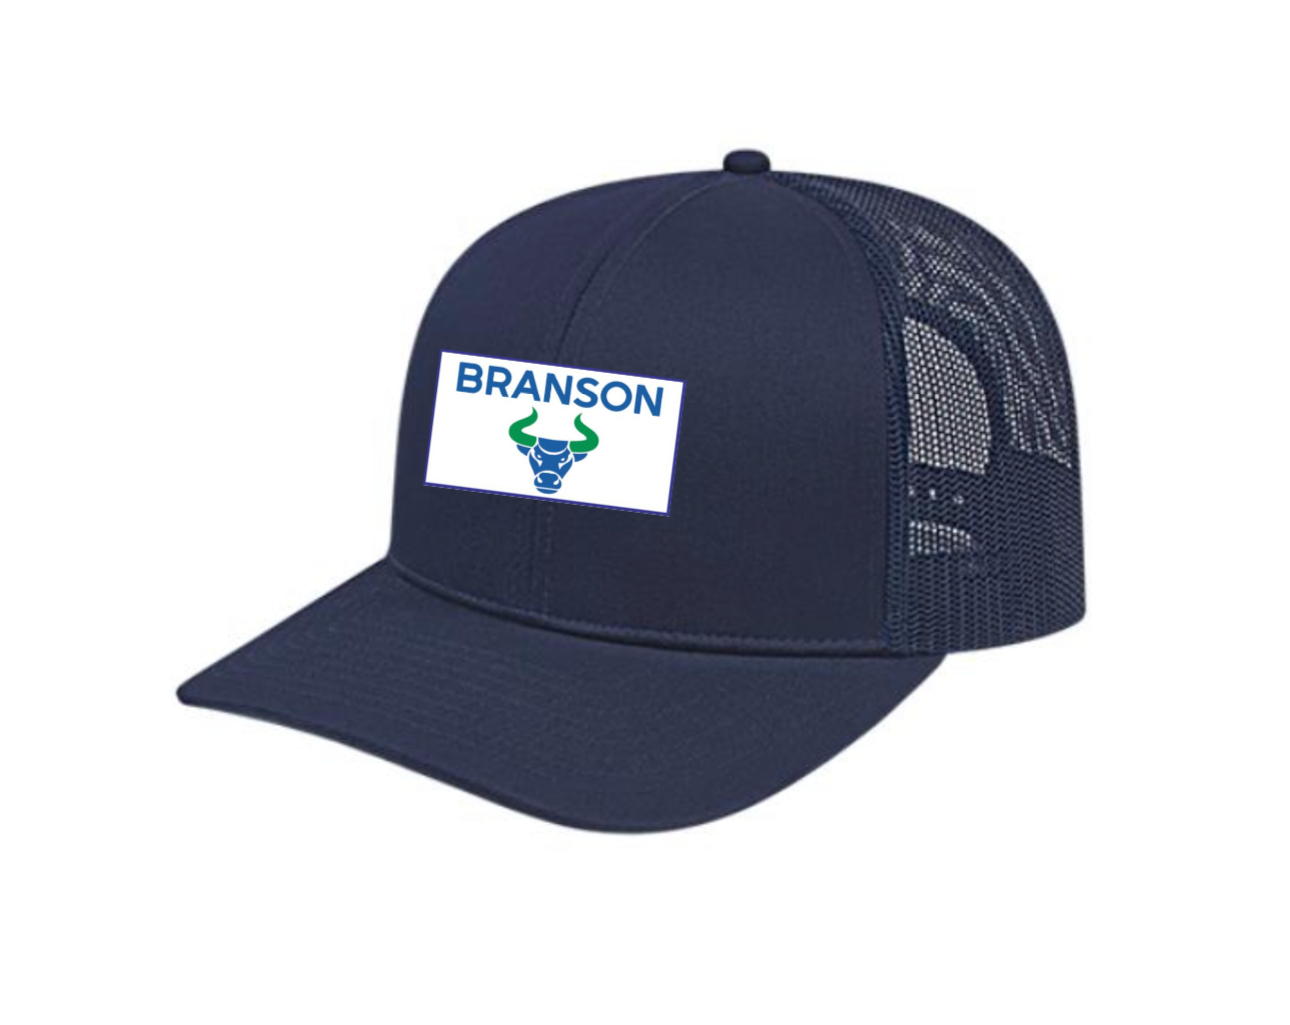 New Navy Branson Trucker Hat